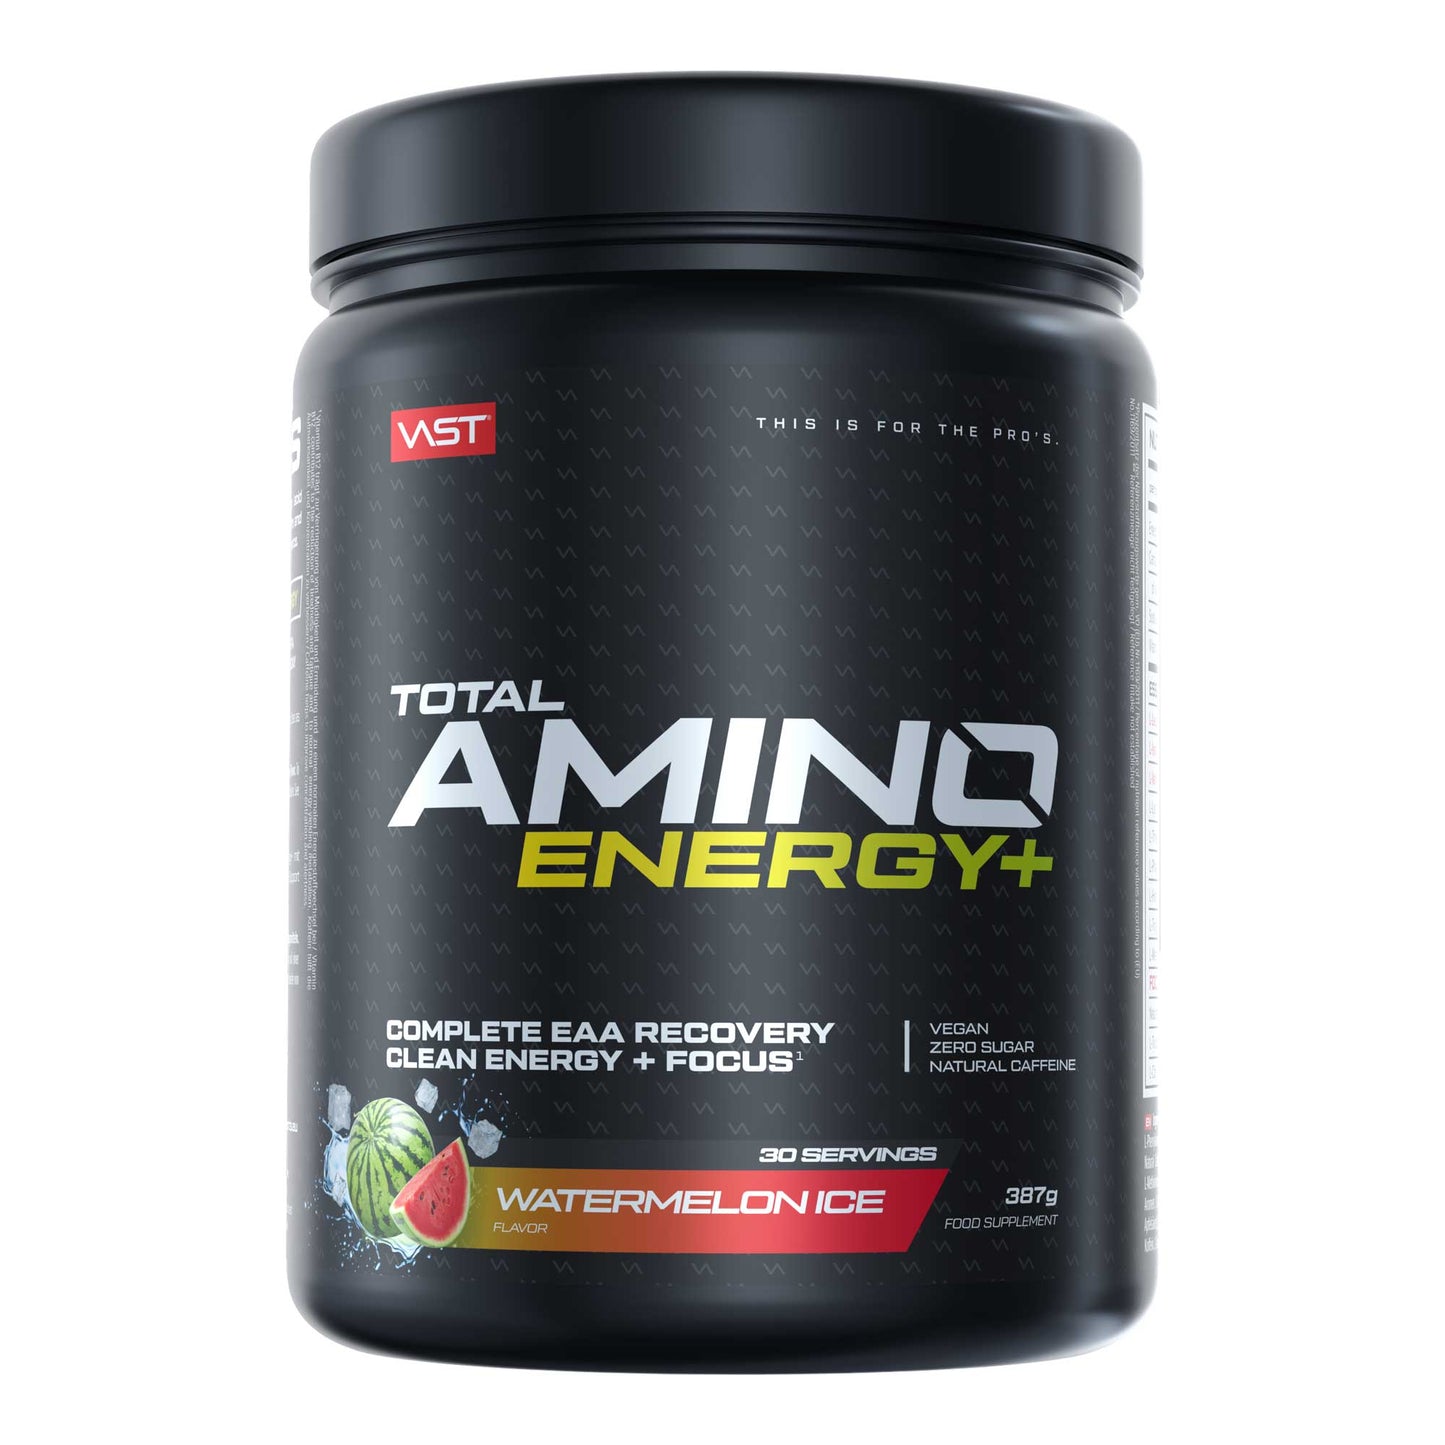 Total Amino ENERGY+